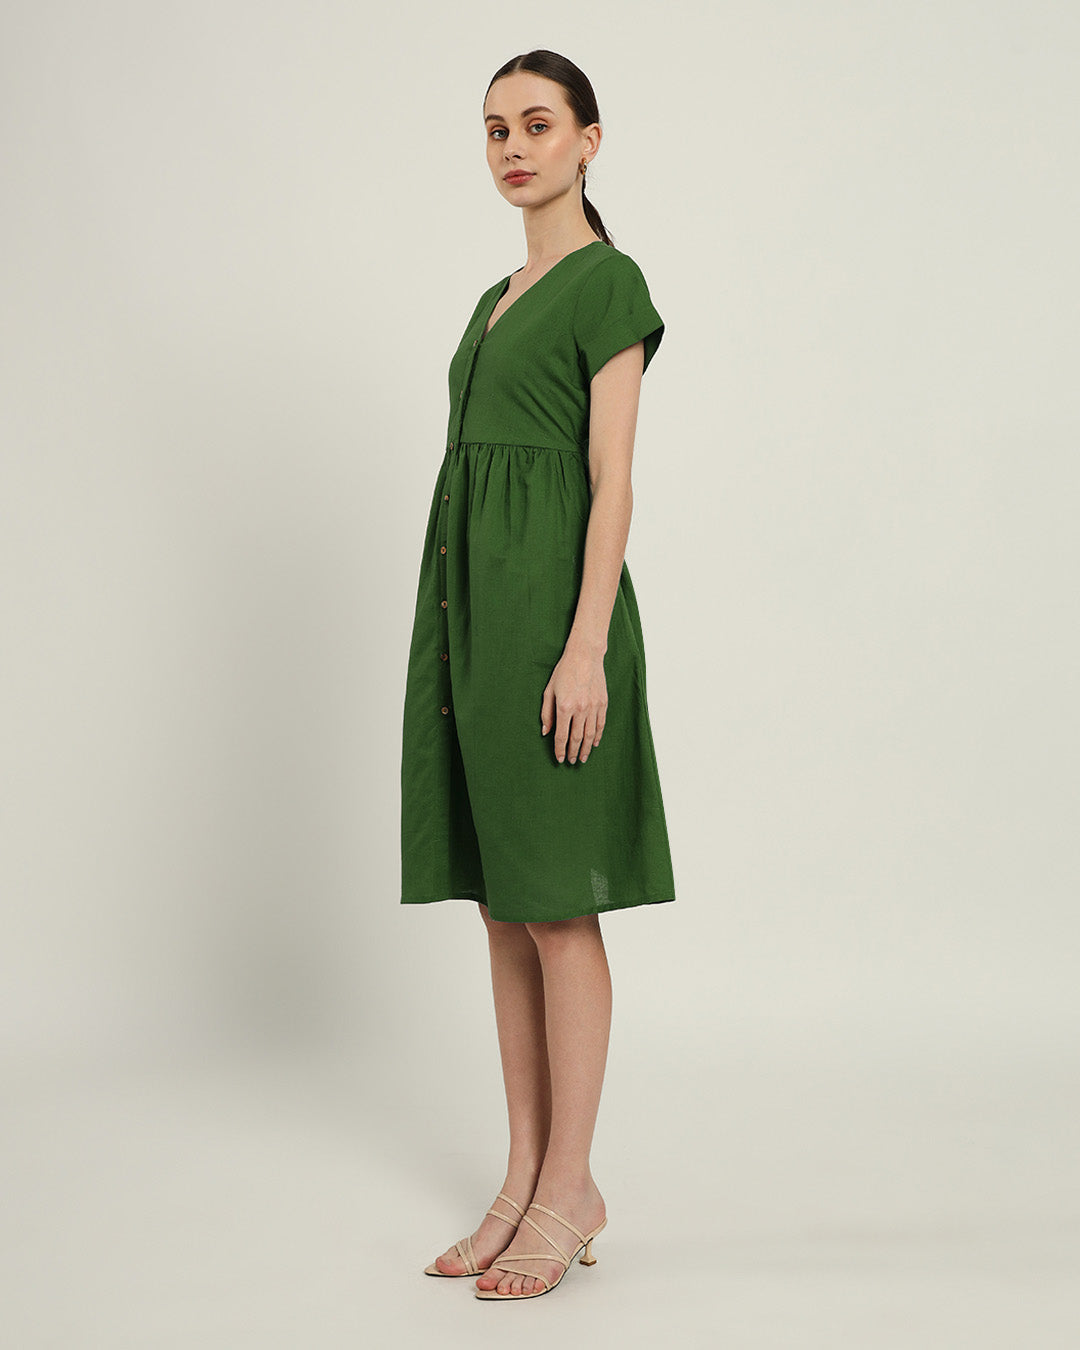 The Valence Emerald Cotton Dress